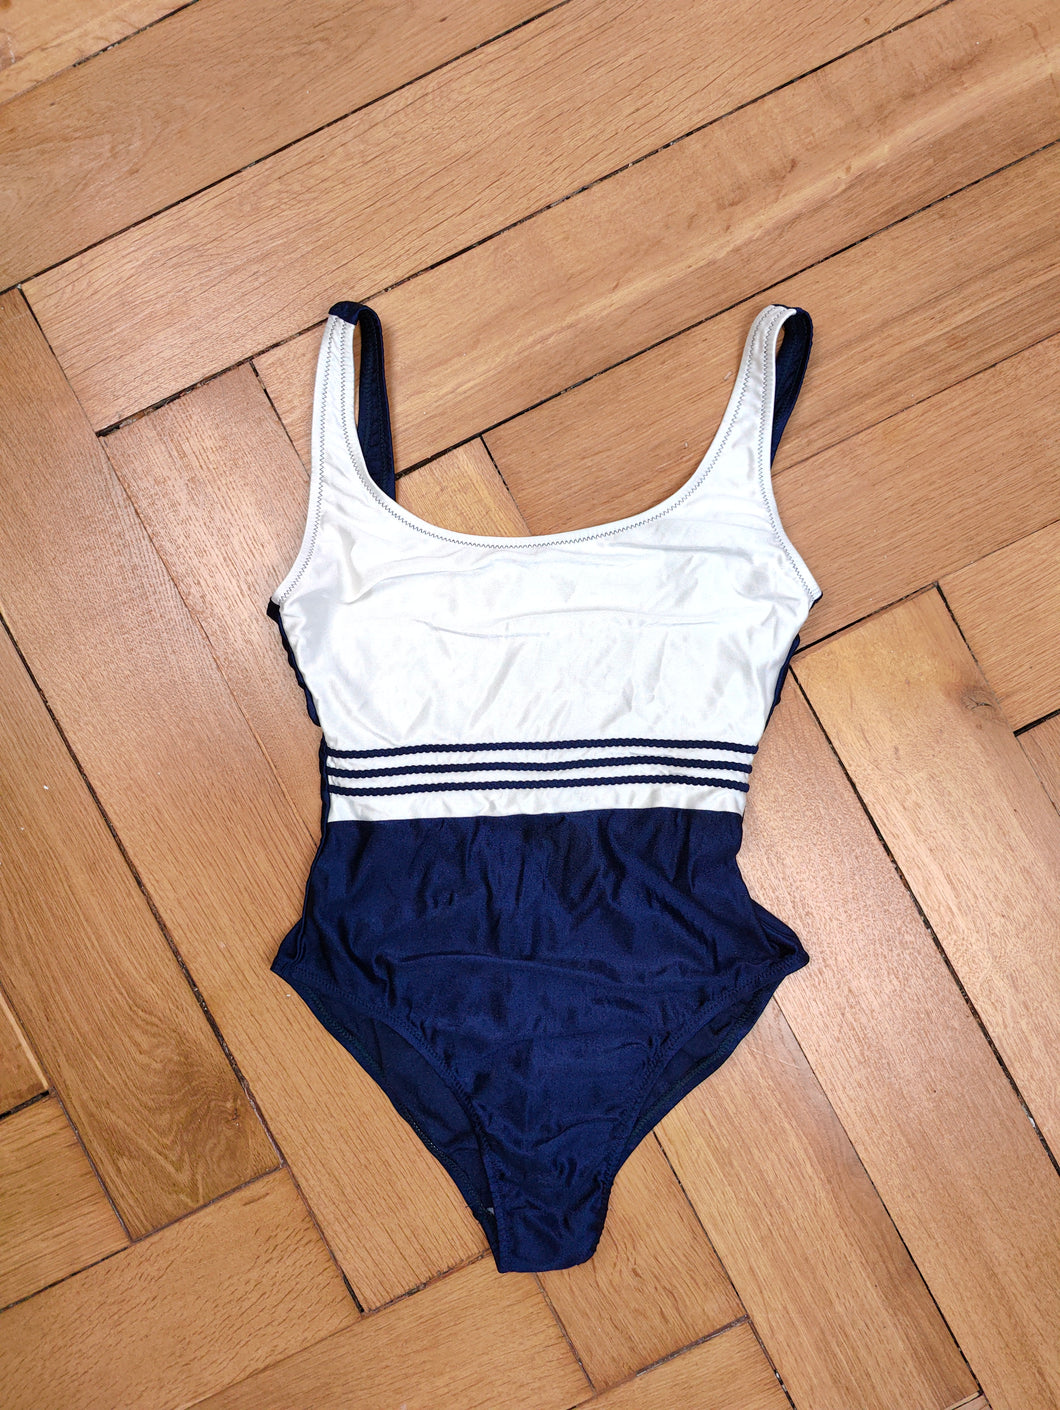 The Swimming Suit Navy Blue White | Vintage second hand Las Olindas bathing swim wear body top S-M